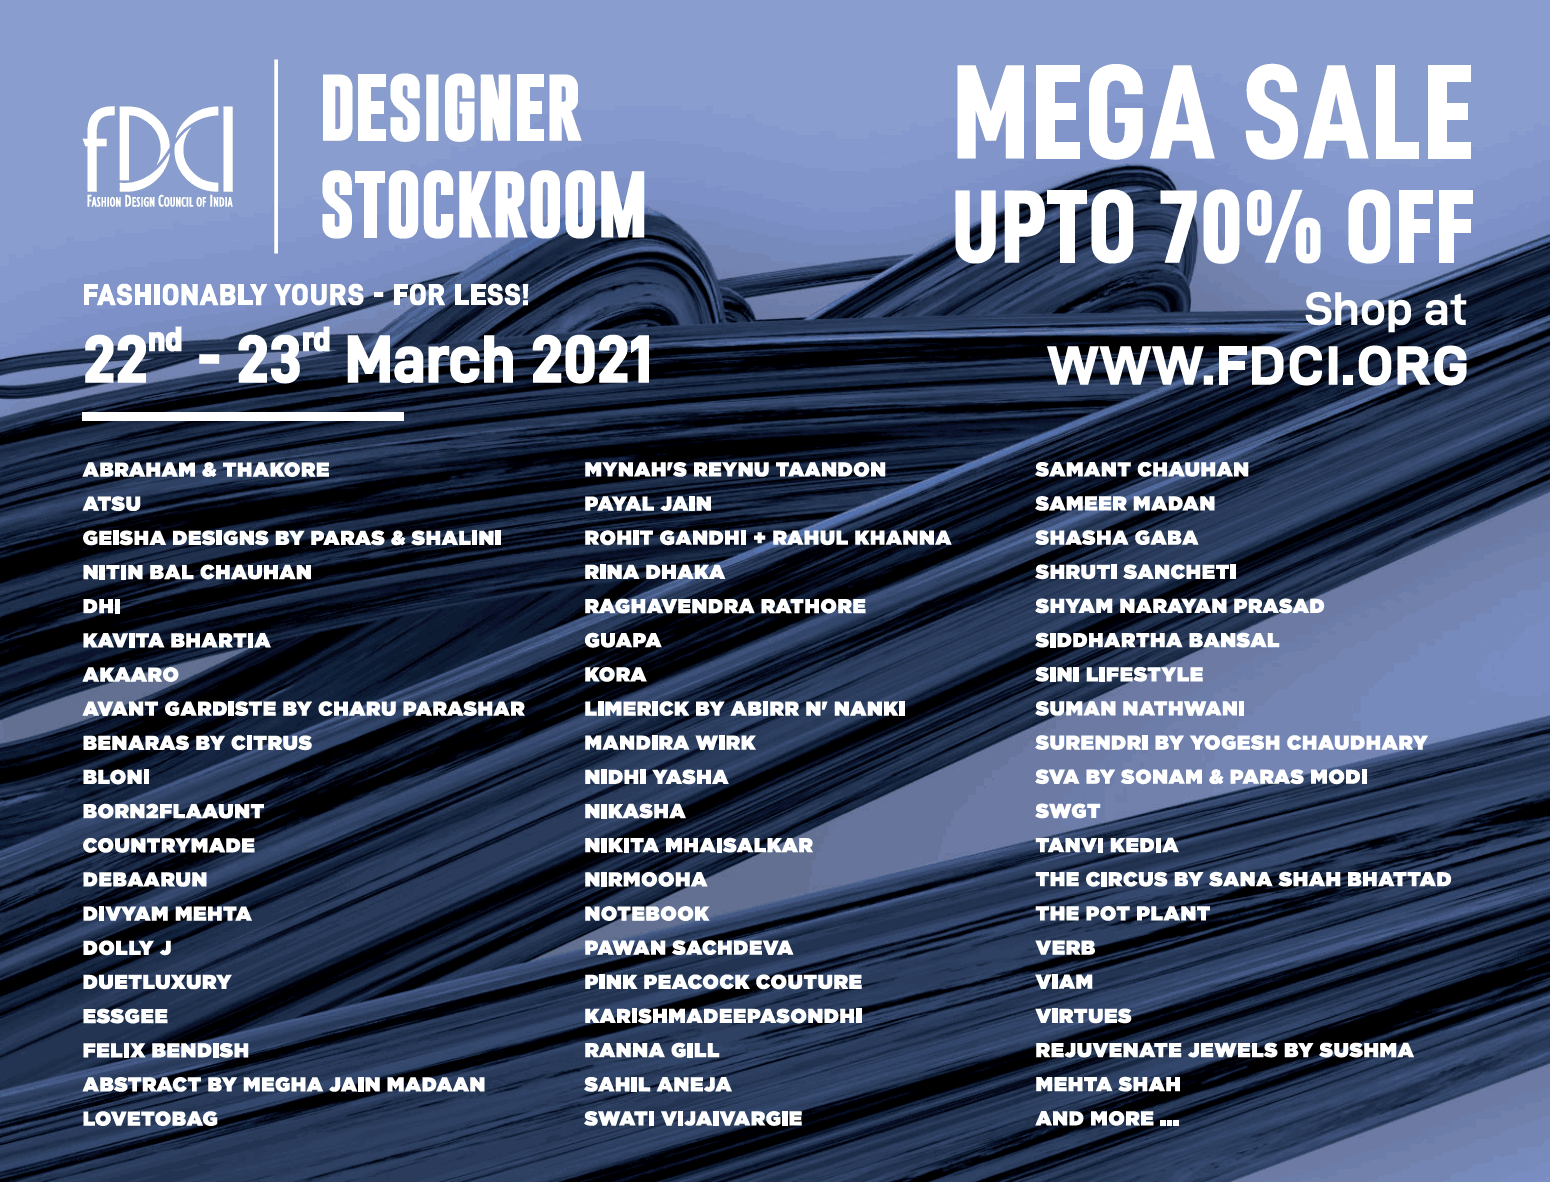 fdci-designer-stockroom-mega-sale-upto-70%-off-ad-delhi-times-21-03-2021